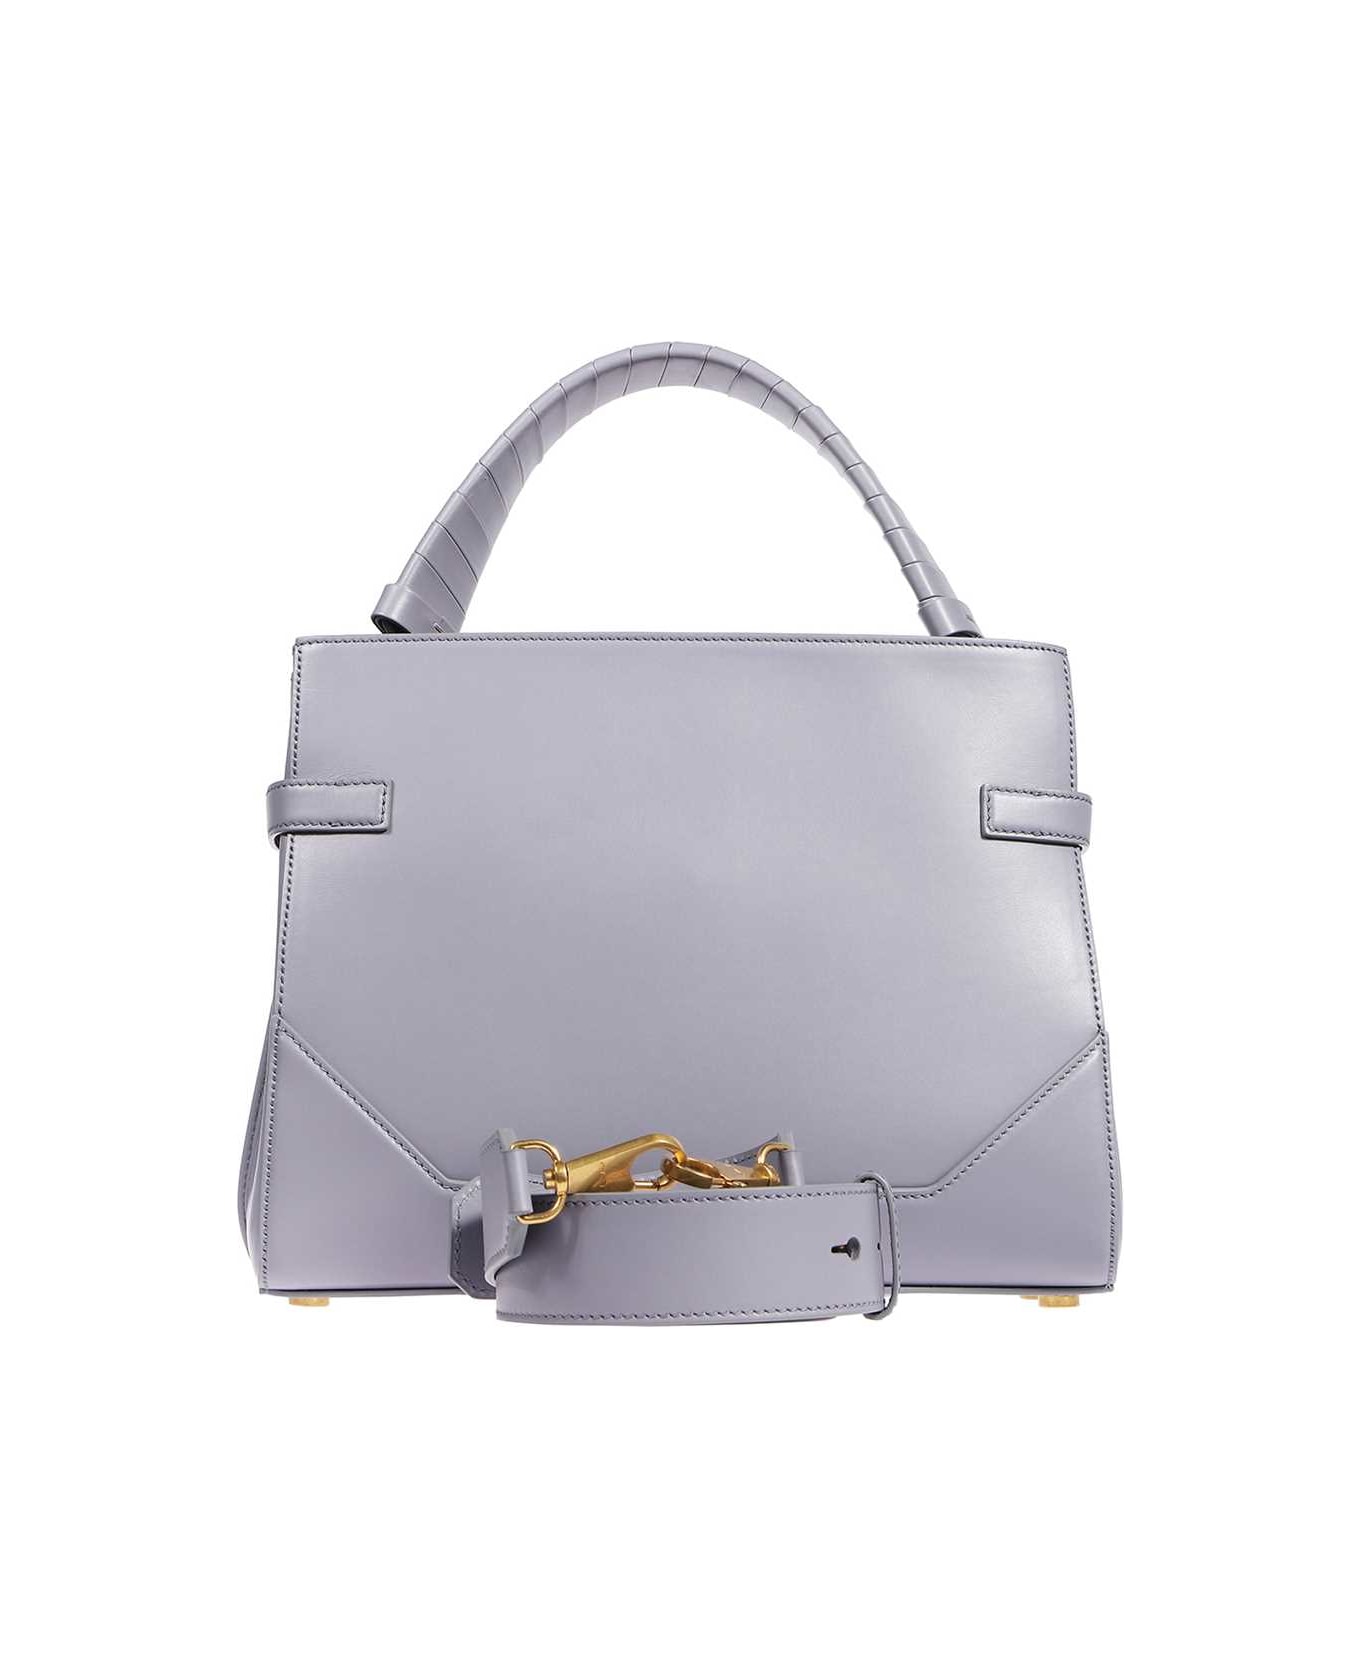 Balmain Leather Handbag - grey トートバッグ